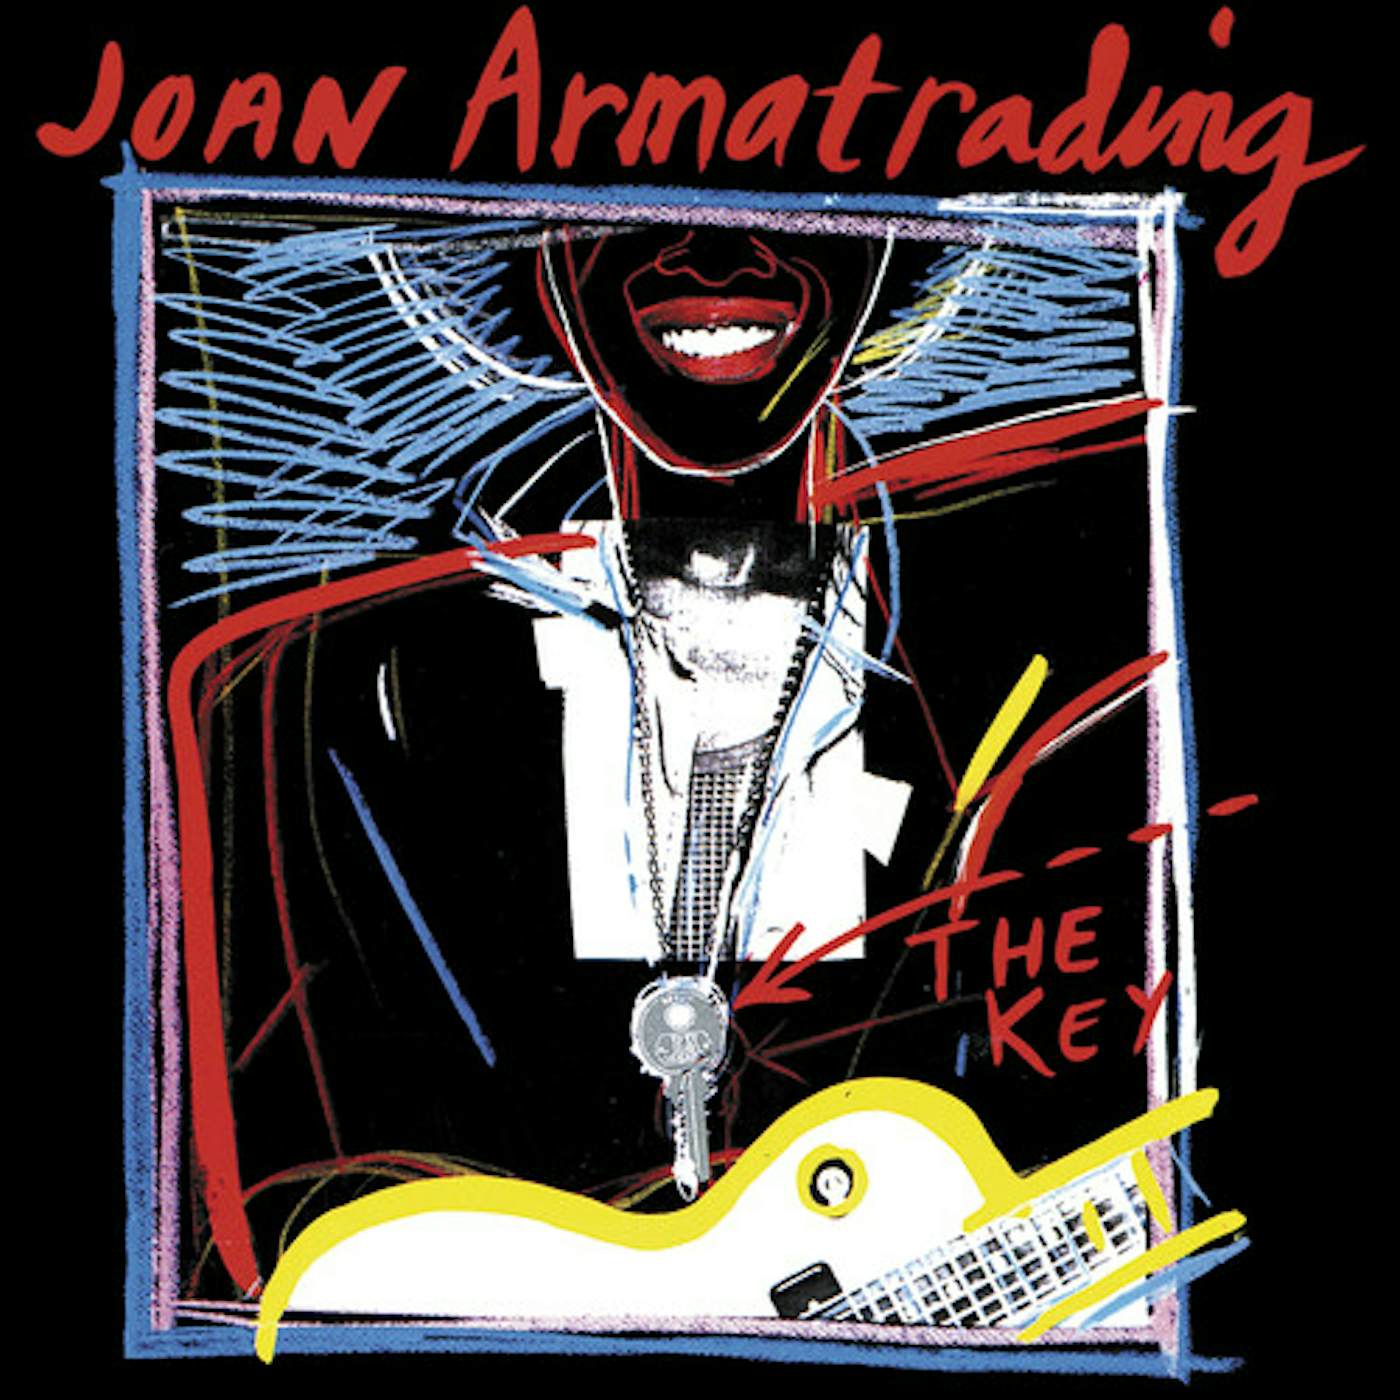 Joan Armatrading KEY CD